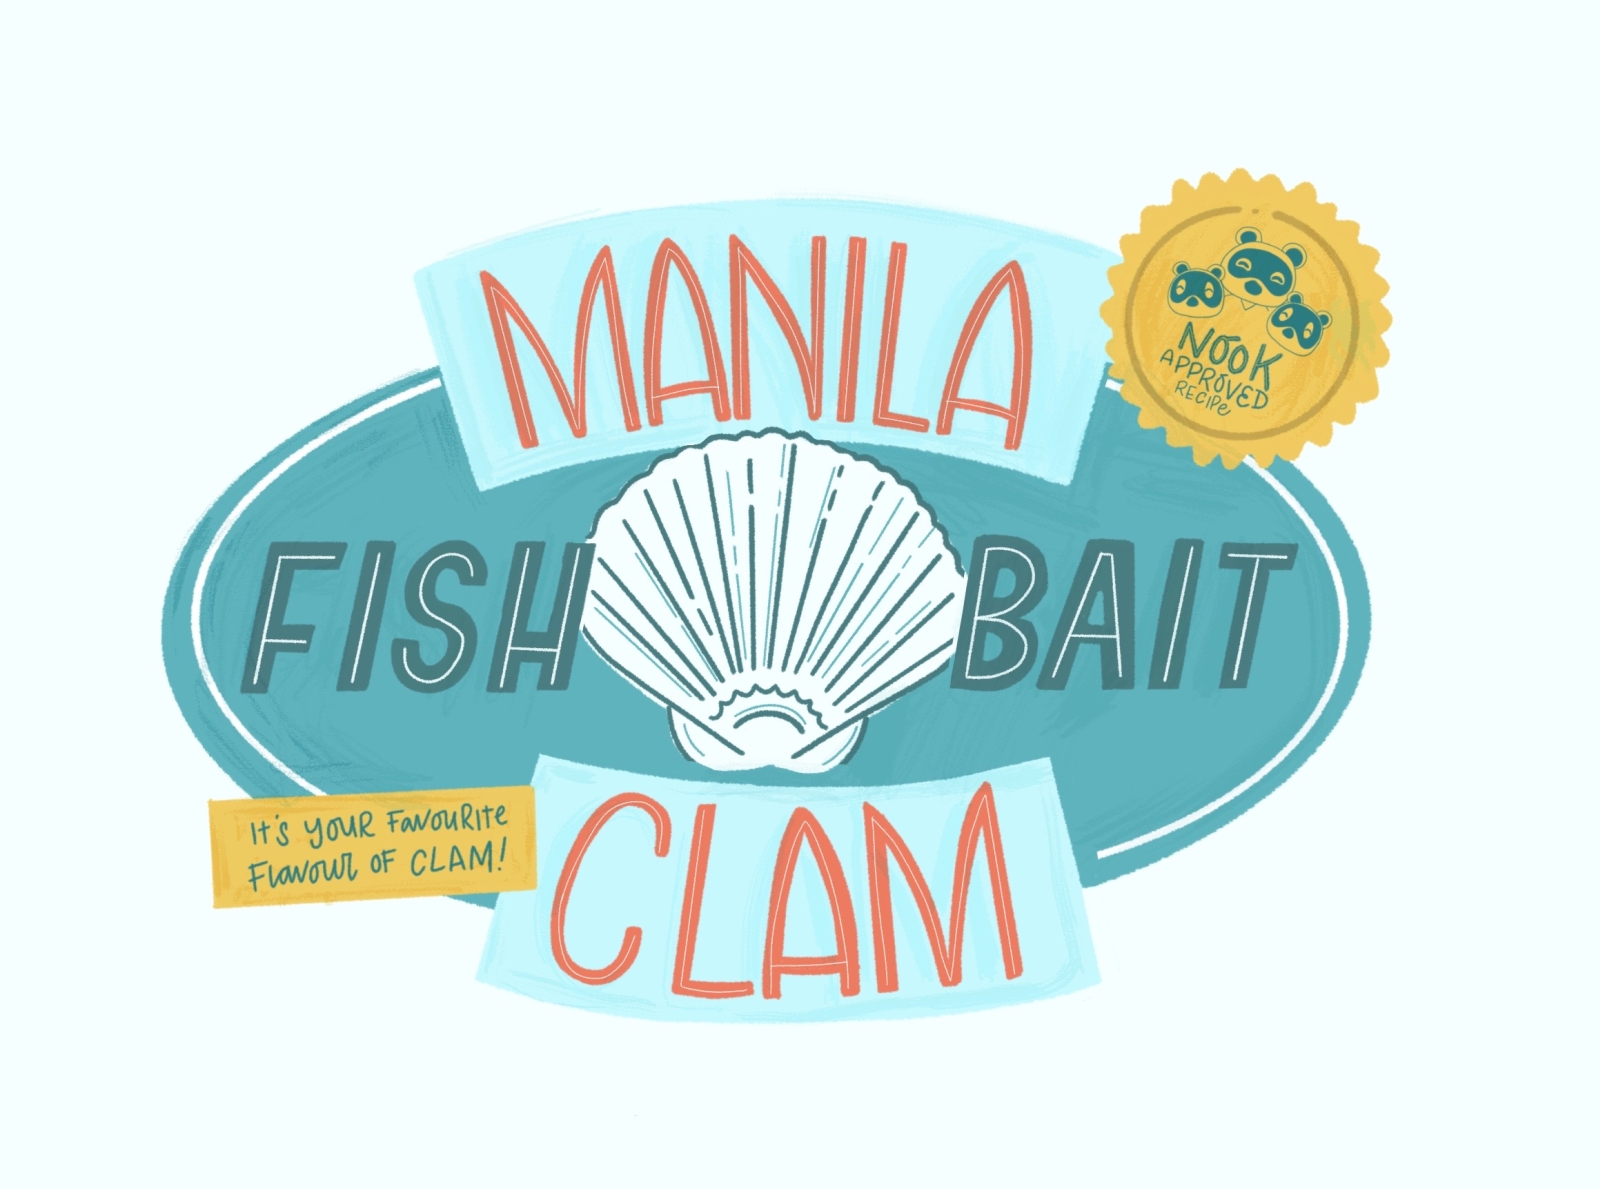 Animal Crossing - Manila clam fish bait logo by Jess Bright on